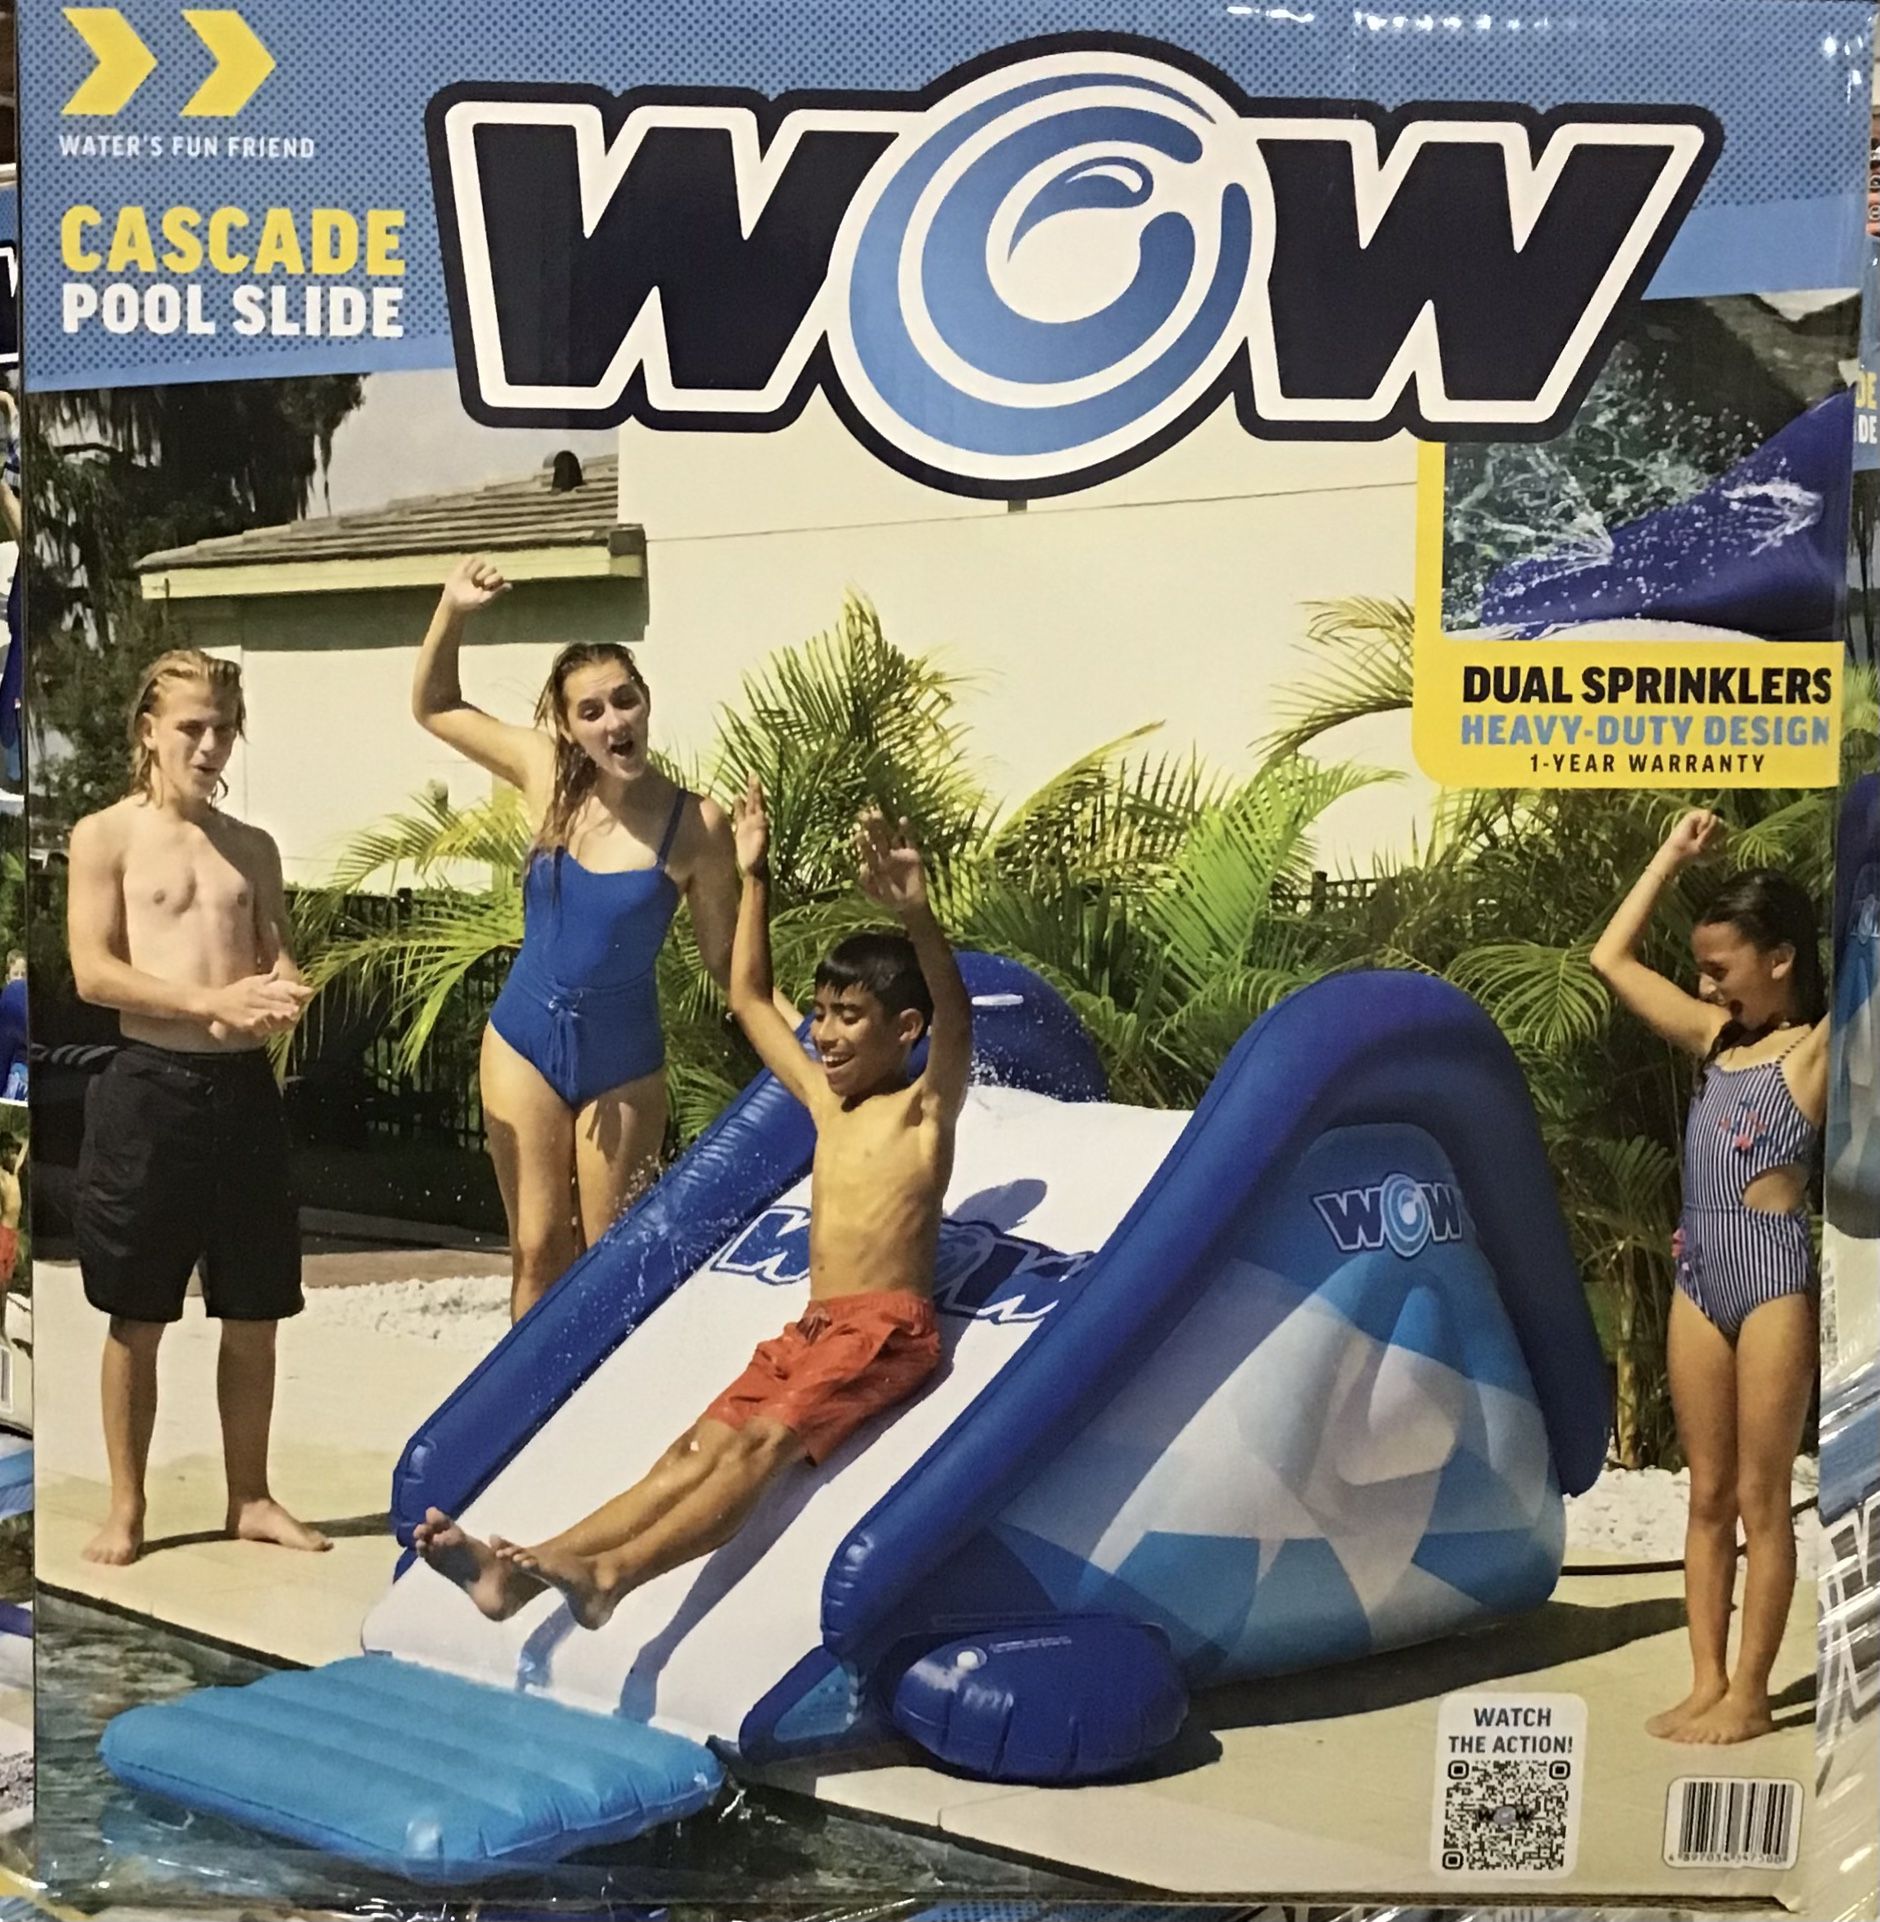 WOW Cascade Pool Slide 